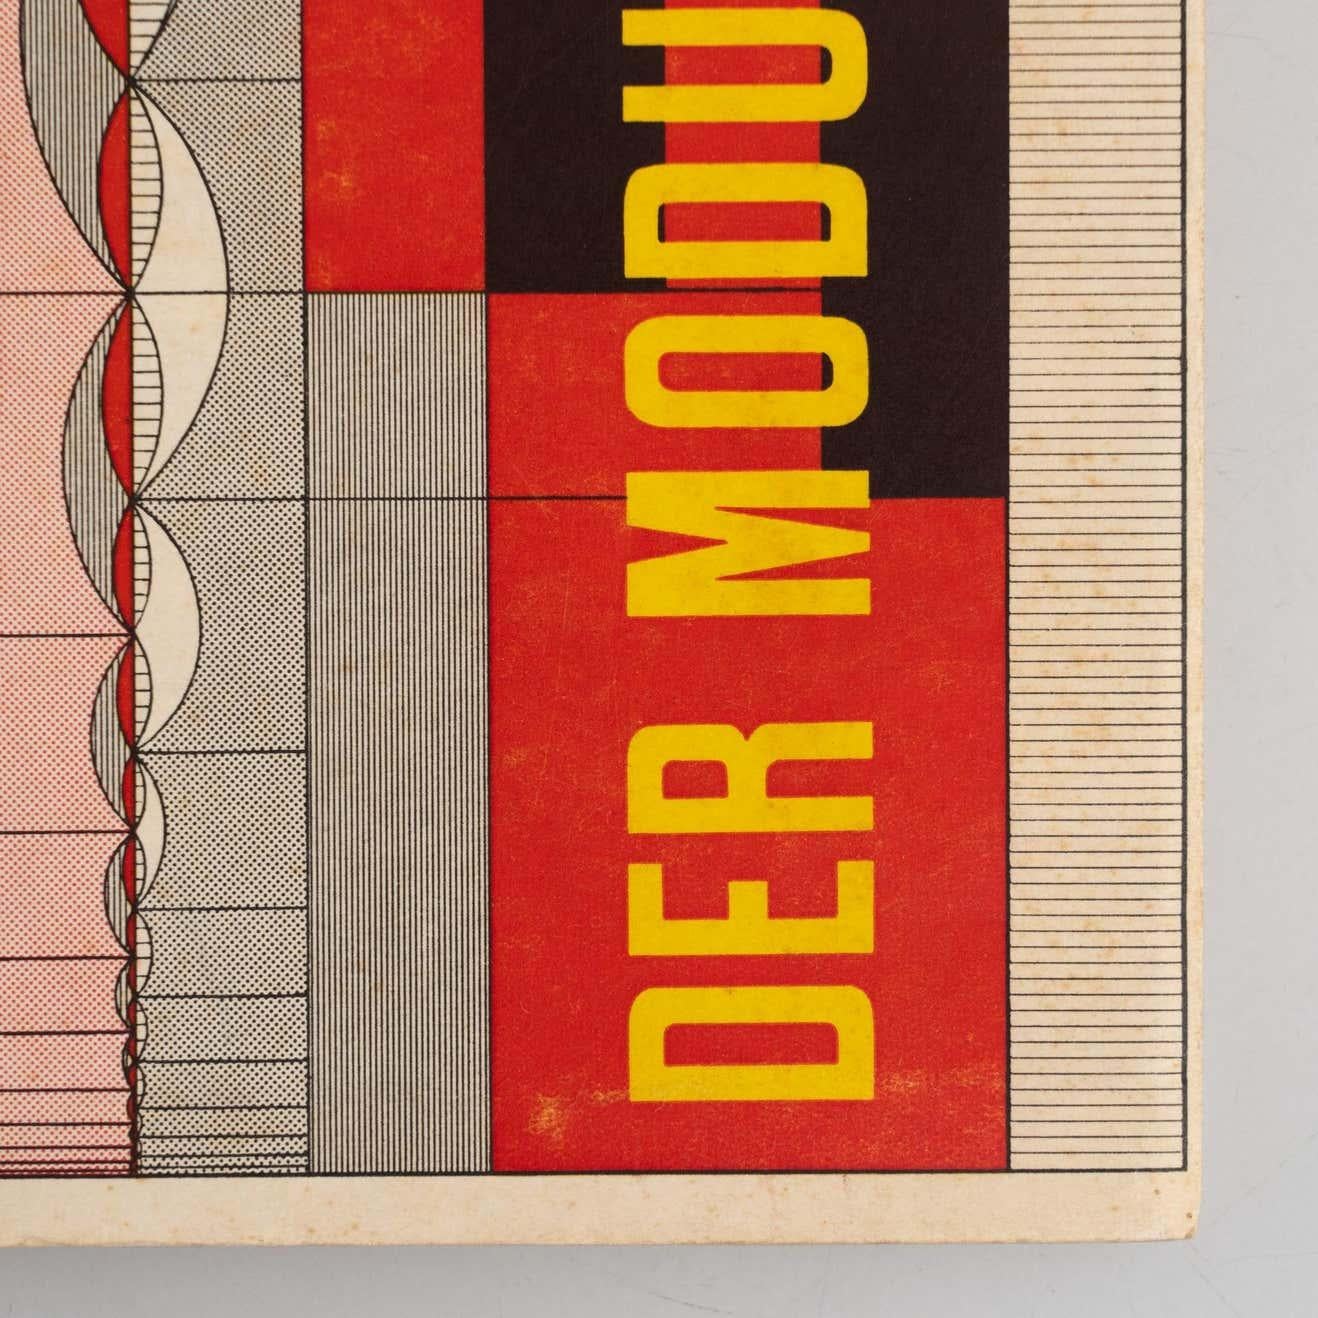 Le Corbusier Der Modulor Book, 1956 In Good Condition For Sale In Barcelona, Barcelona